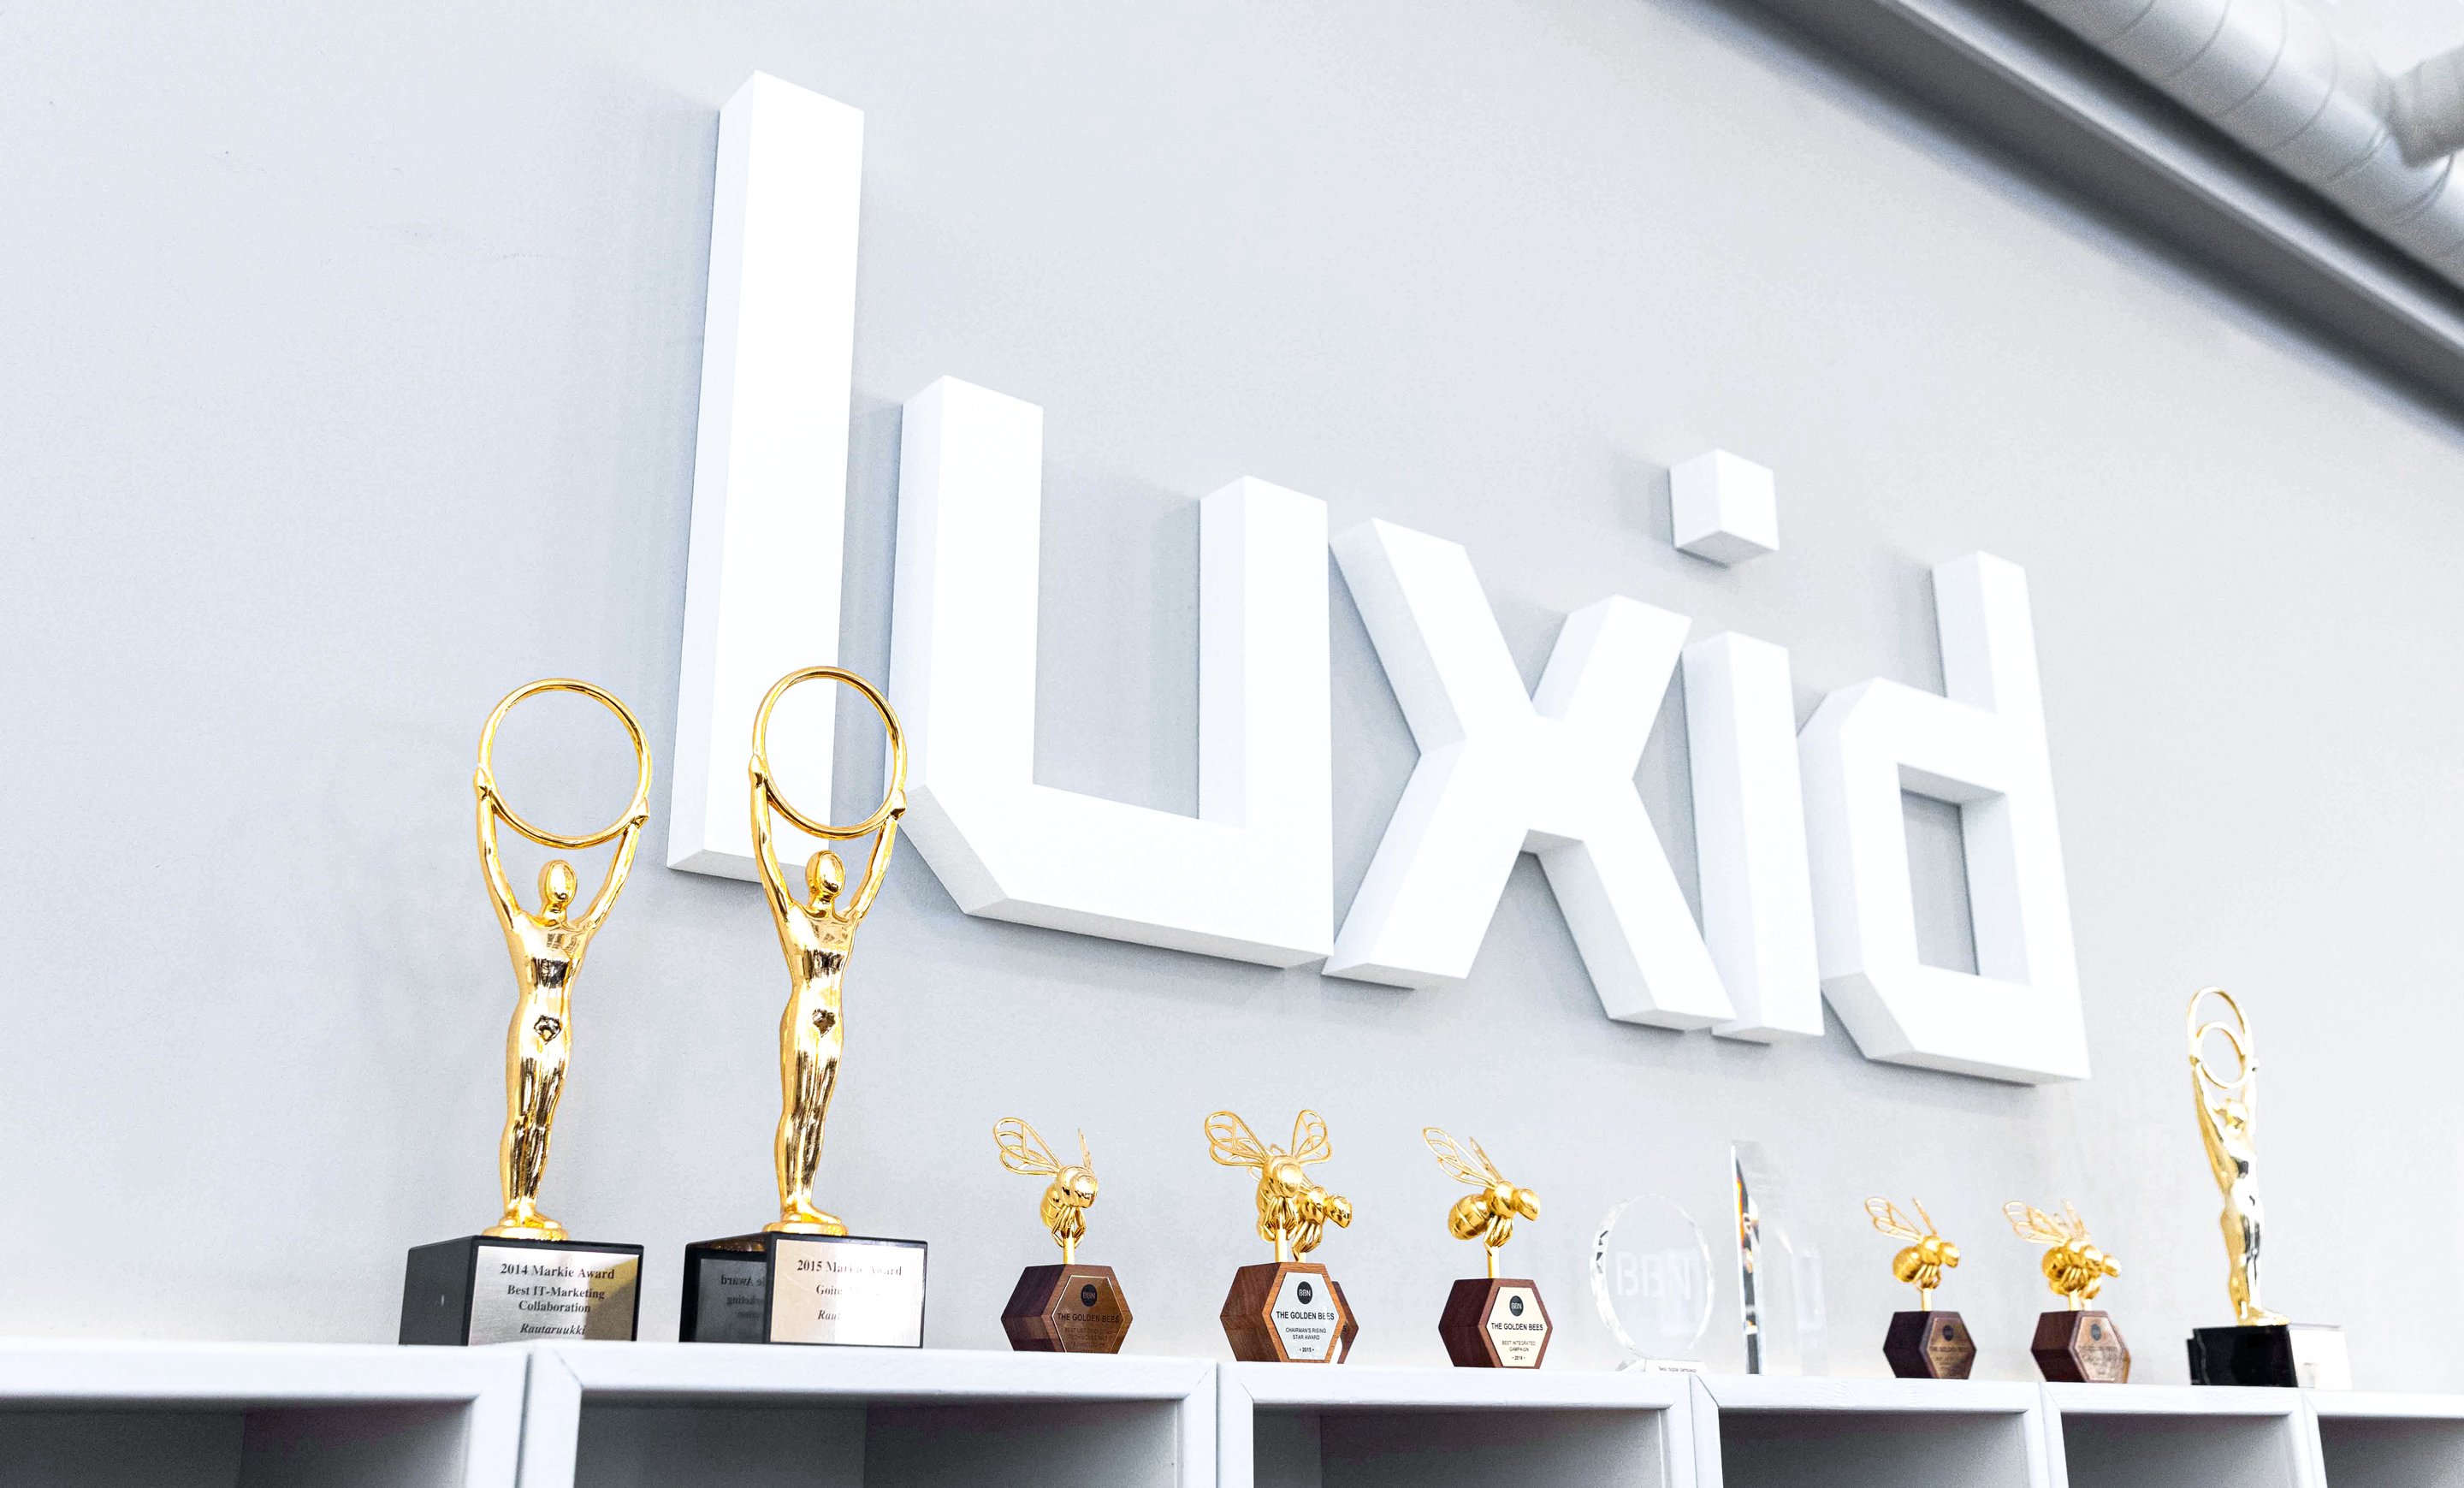 luxid awards on display